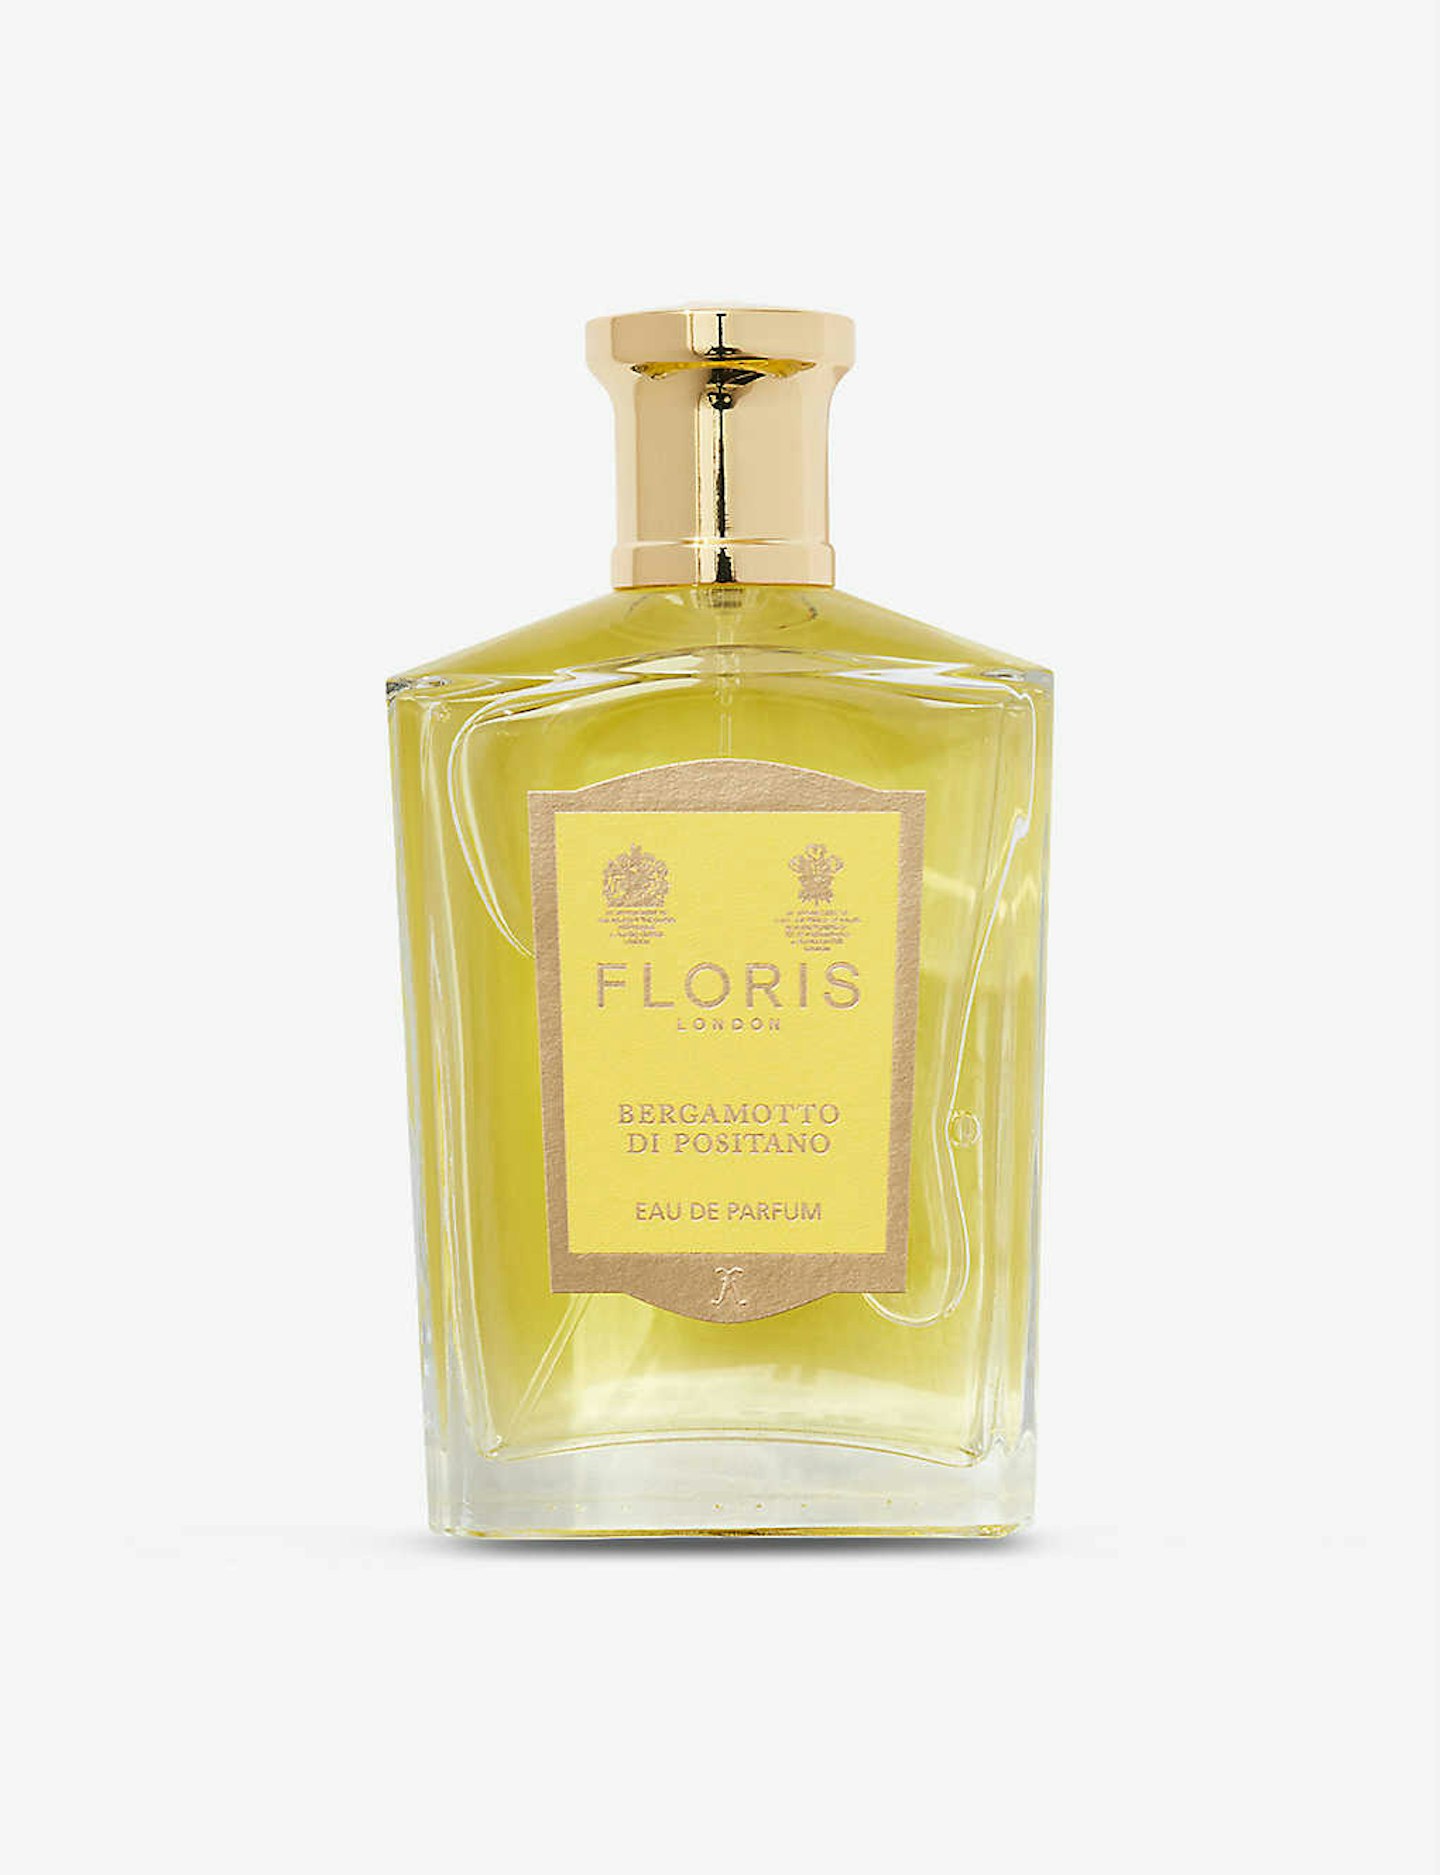 Floris London Bergamotto di Positano Eau de Parfum, 